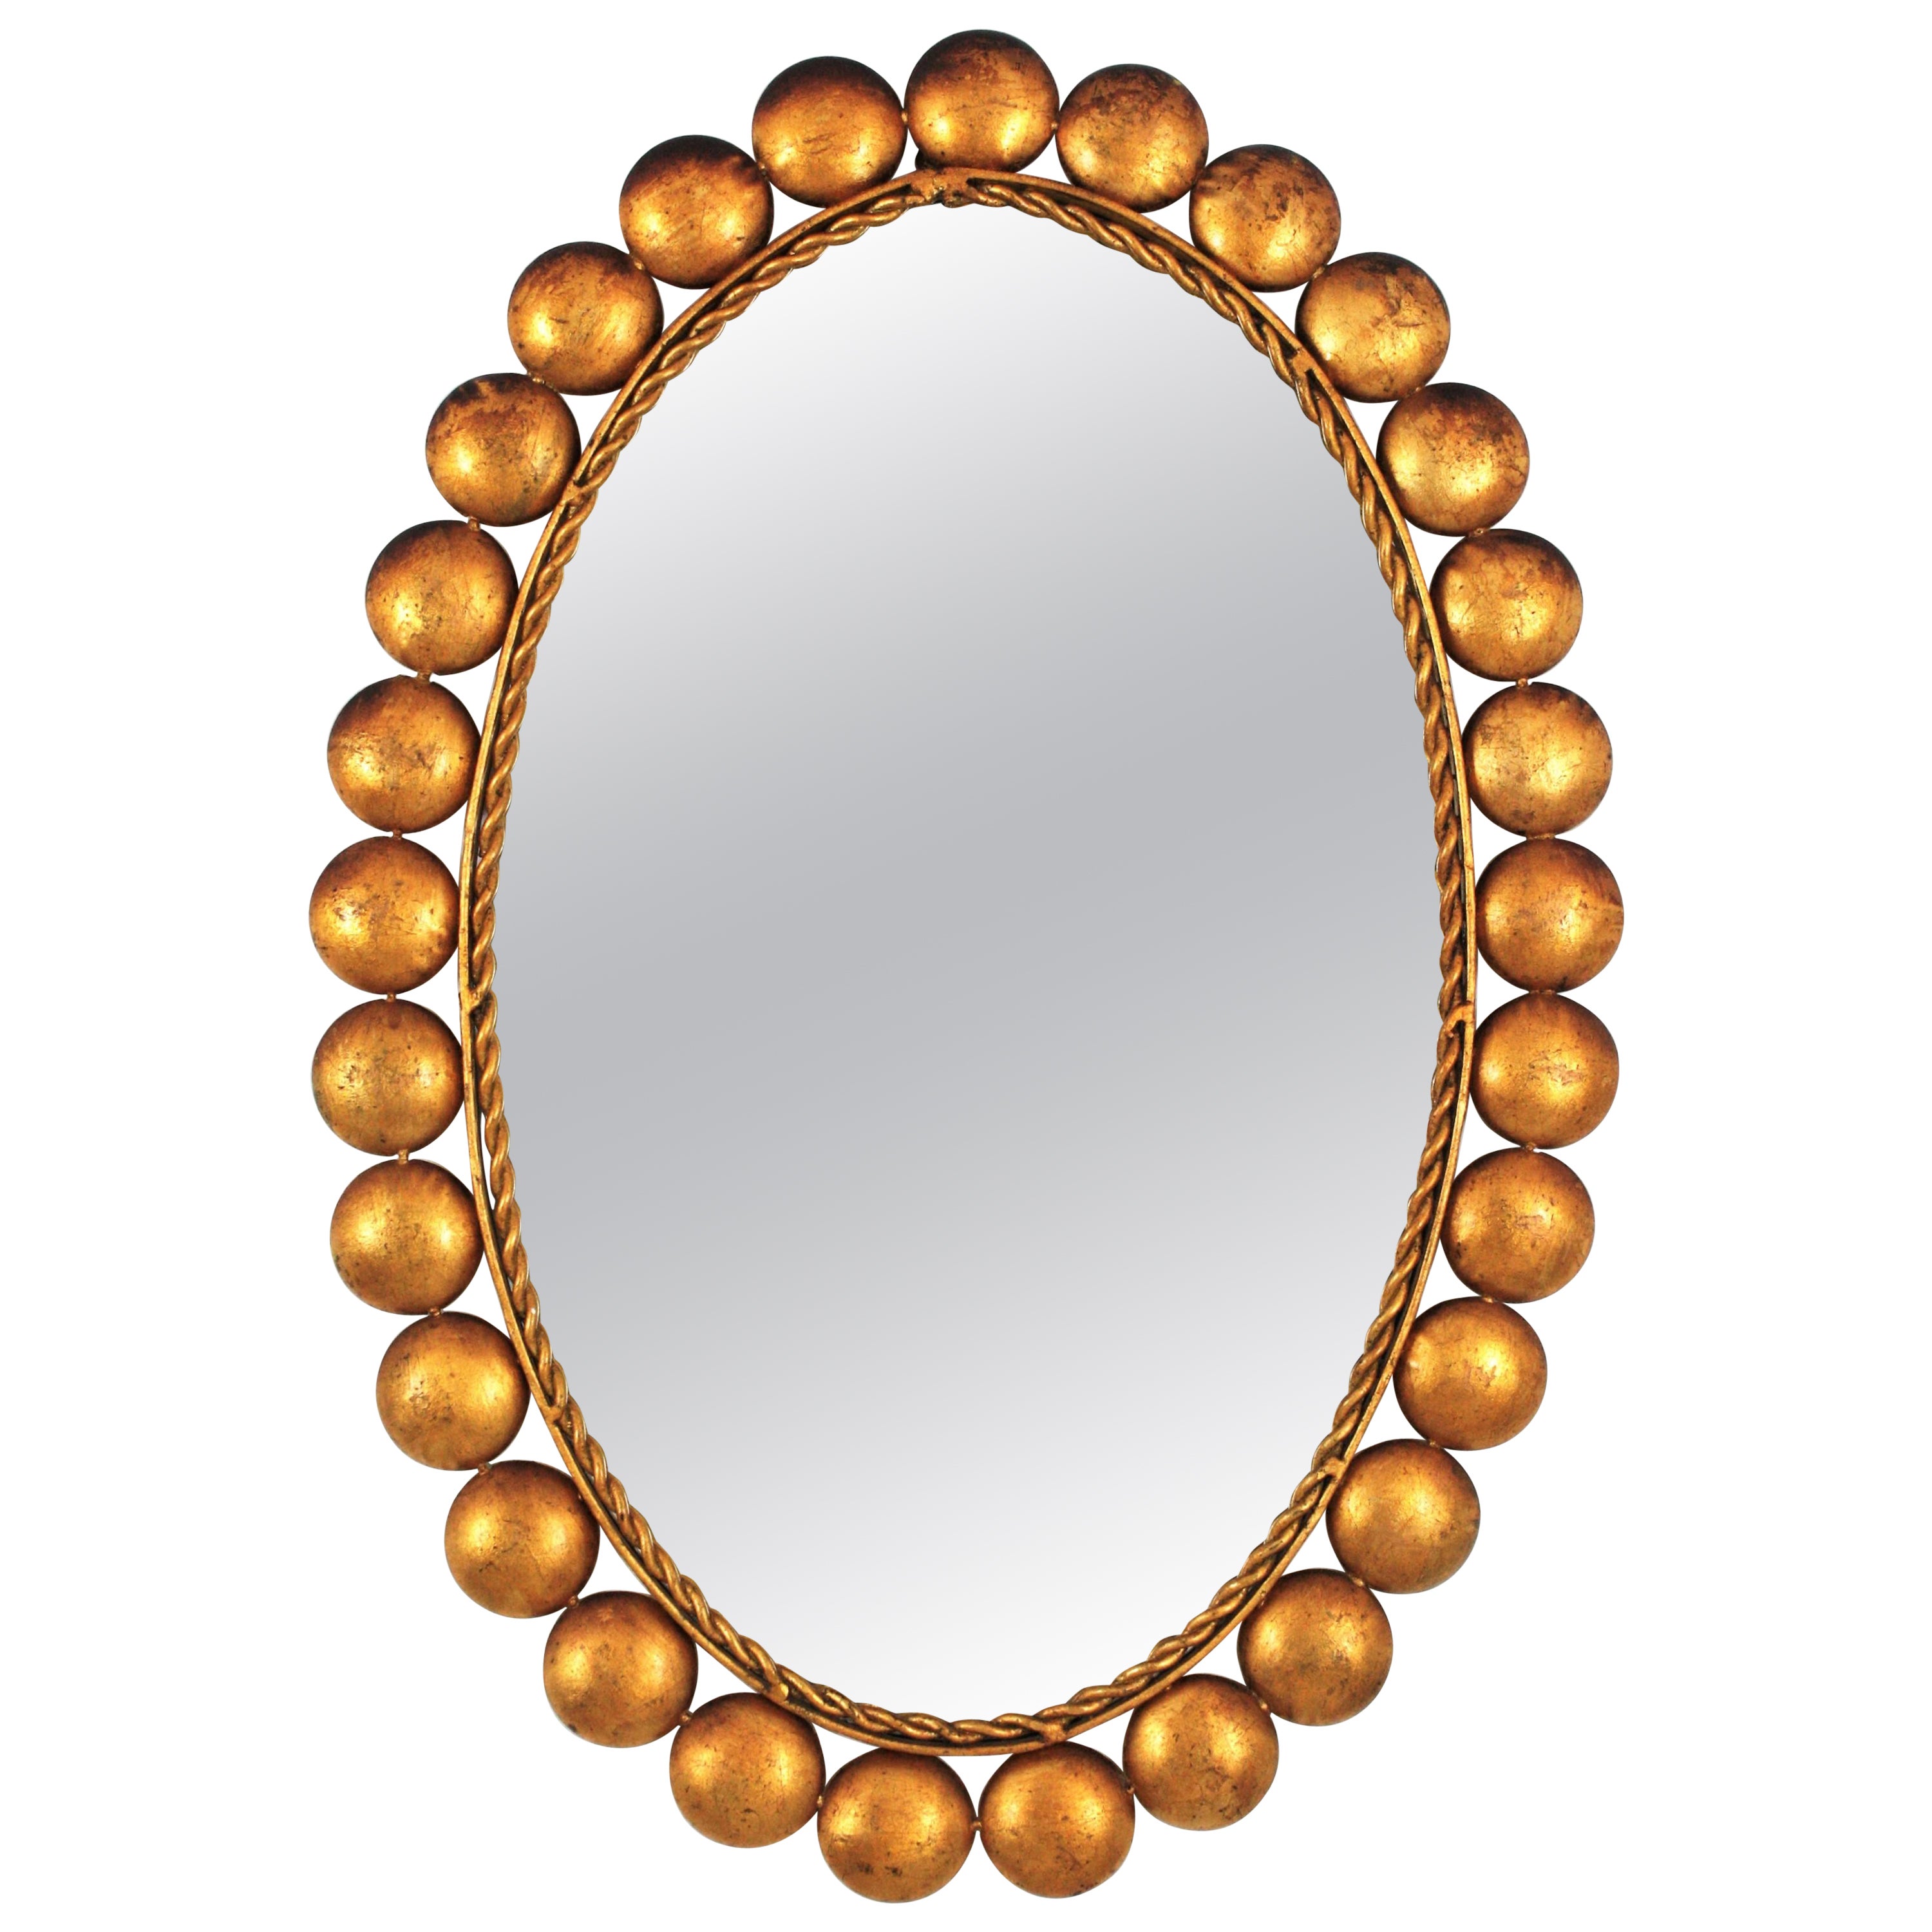 Ovaler Spiegel mit Kugelrahmen, vergoldetes Metall